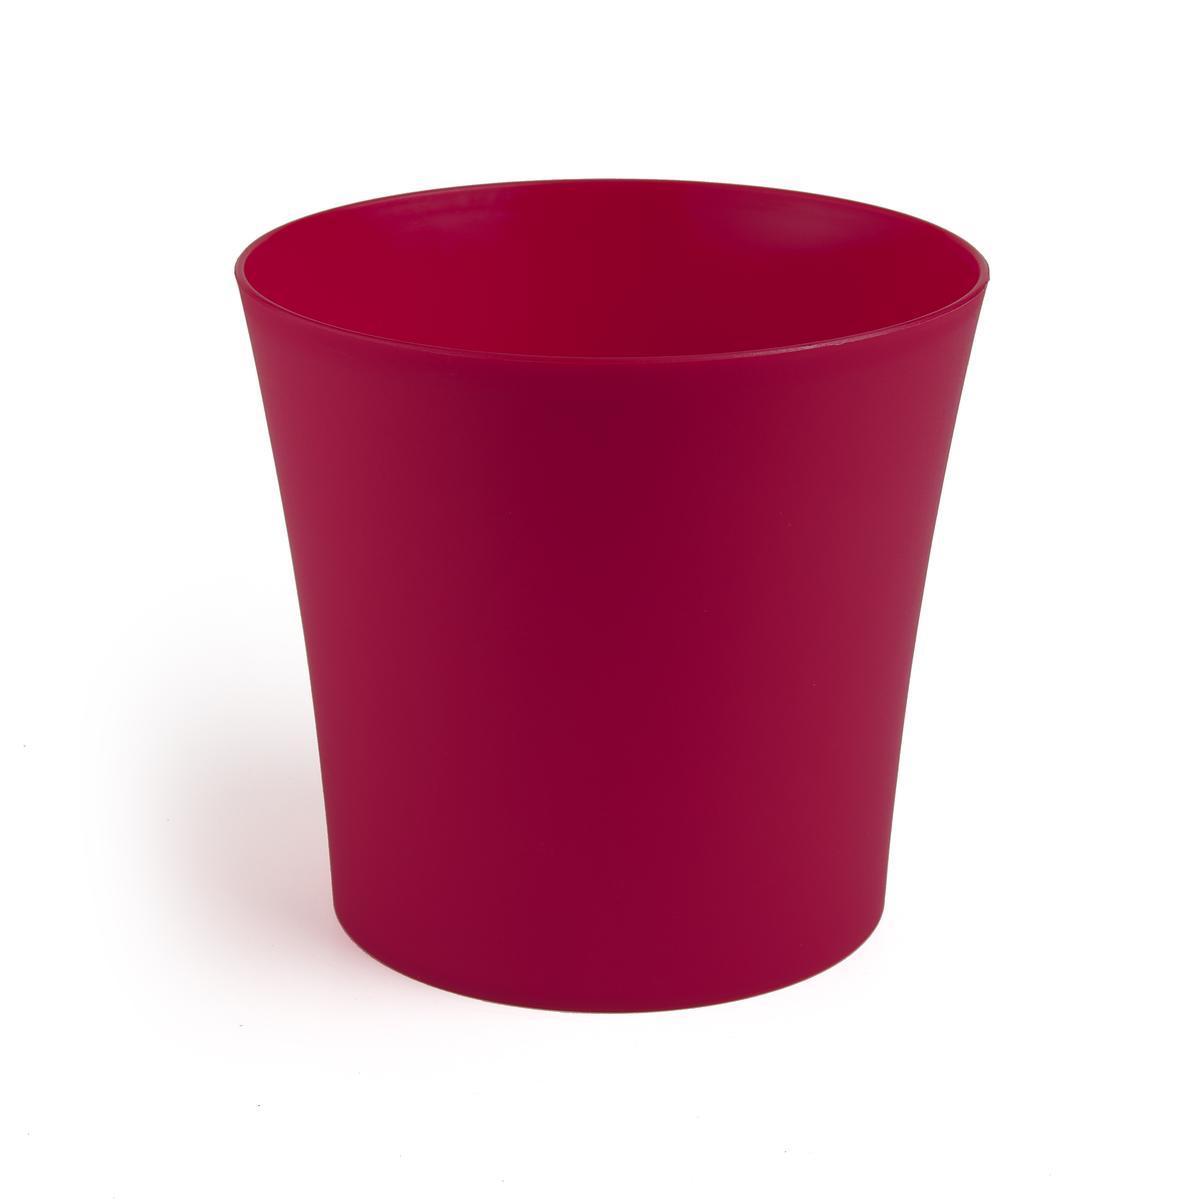 Pot Fiolek - ø 15.3 x H 16.5 cm - Rouge